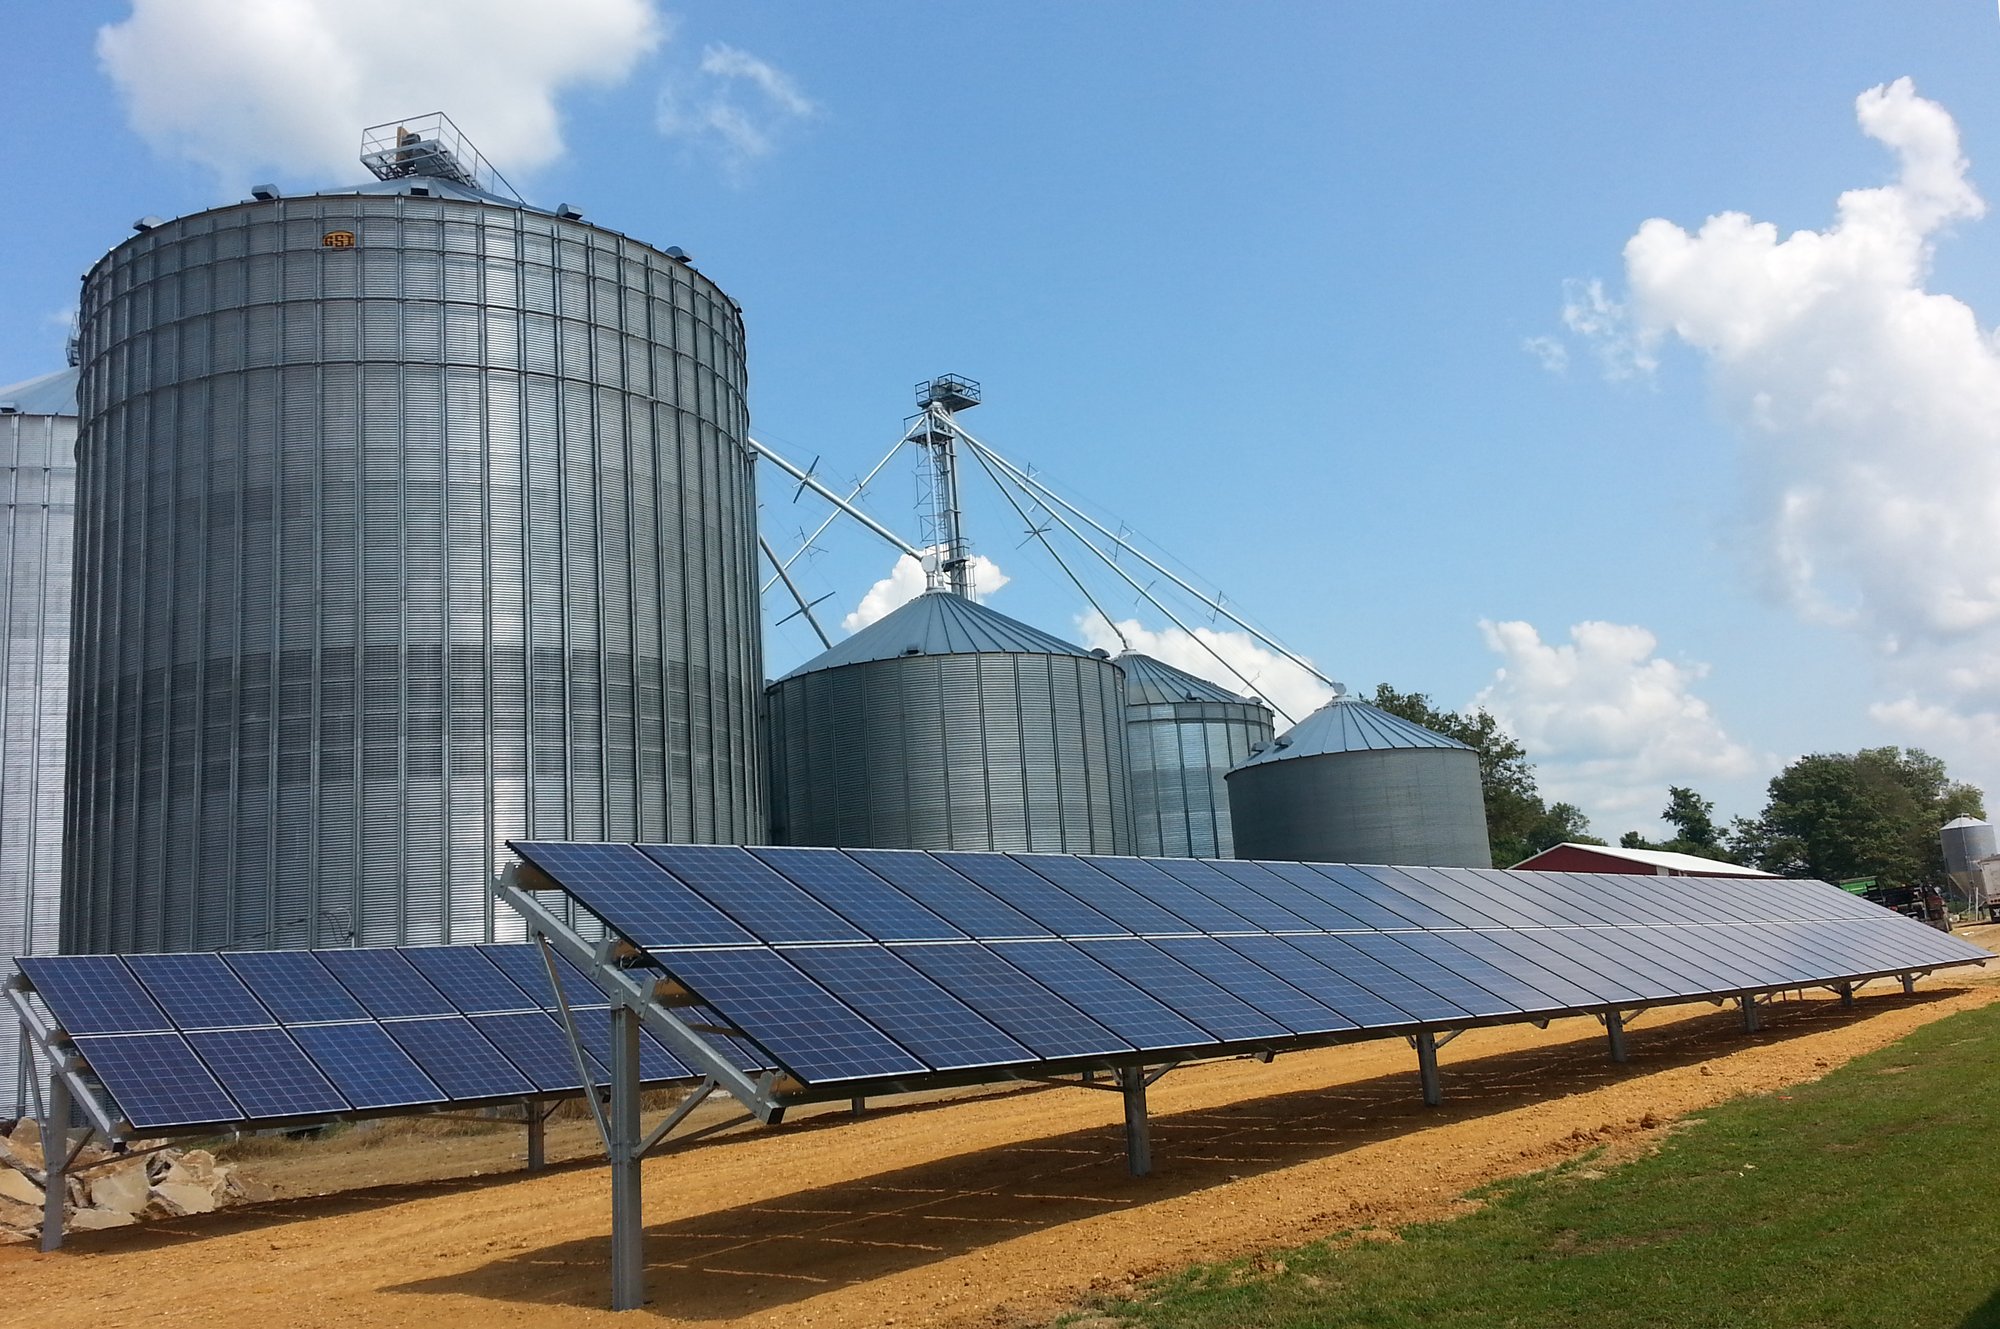 Solar panels next to silos in Illinois.